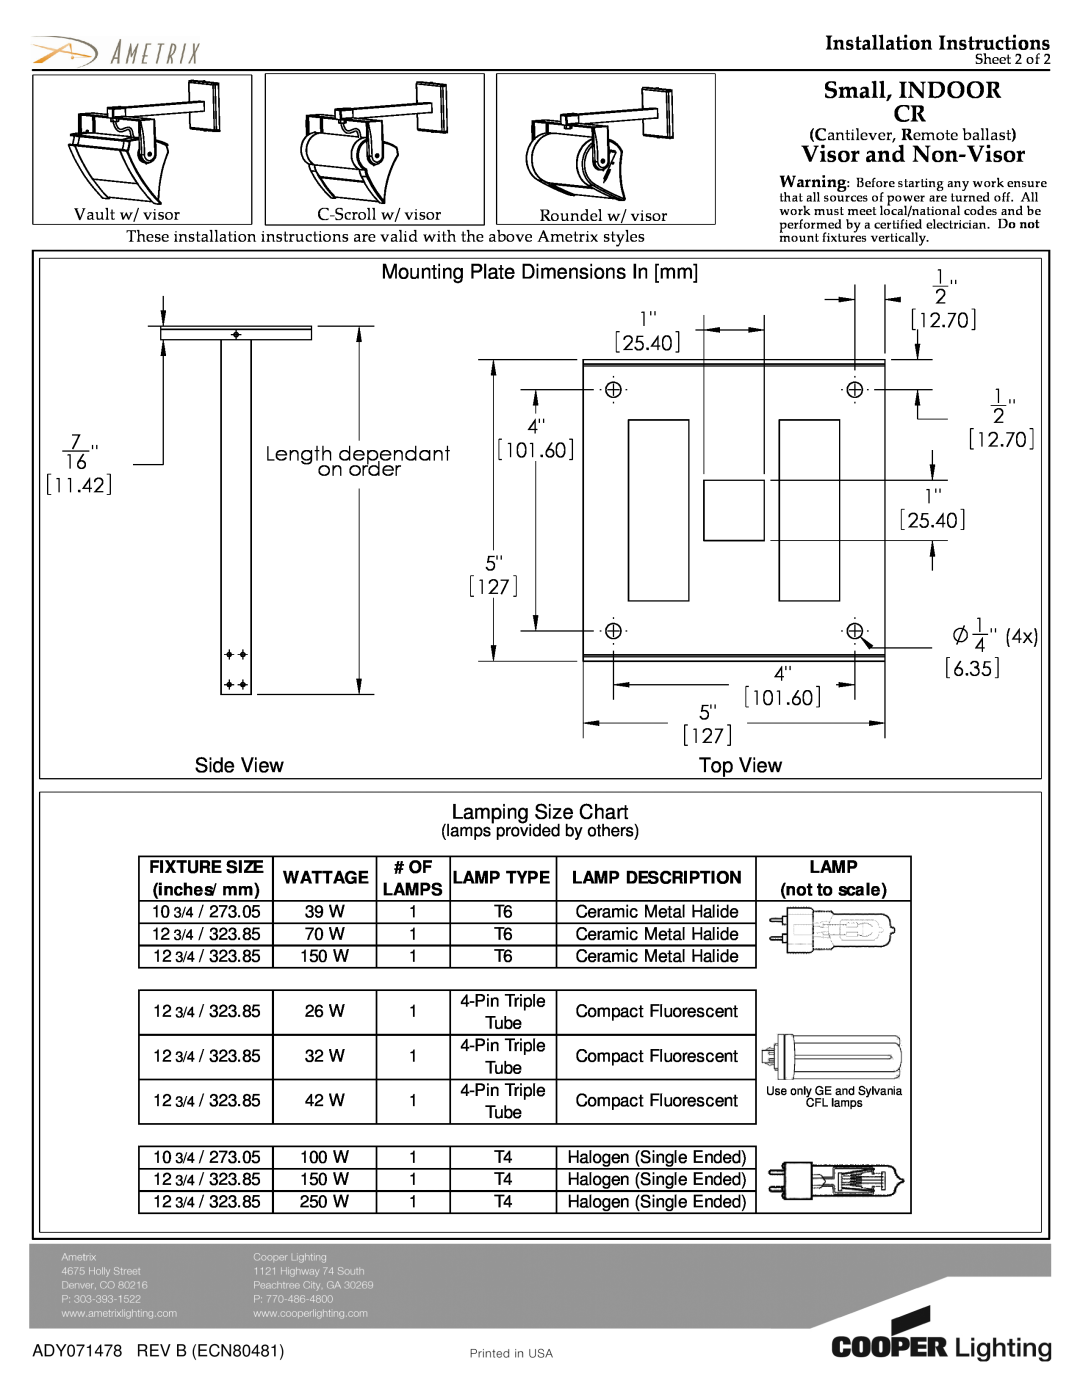 Cooper Lighting ADY071478 installation instructions Small, INDOOR CR, Visor and Non-Visor, Installation Instructions, 12.70 